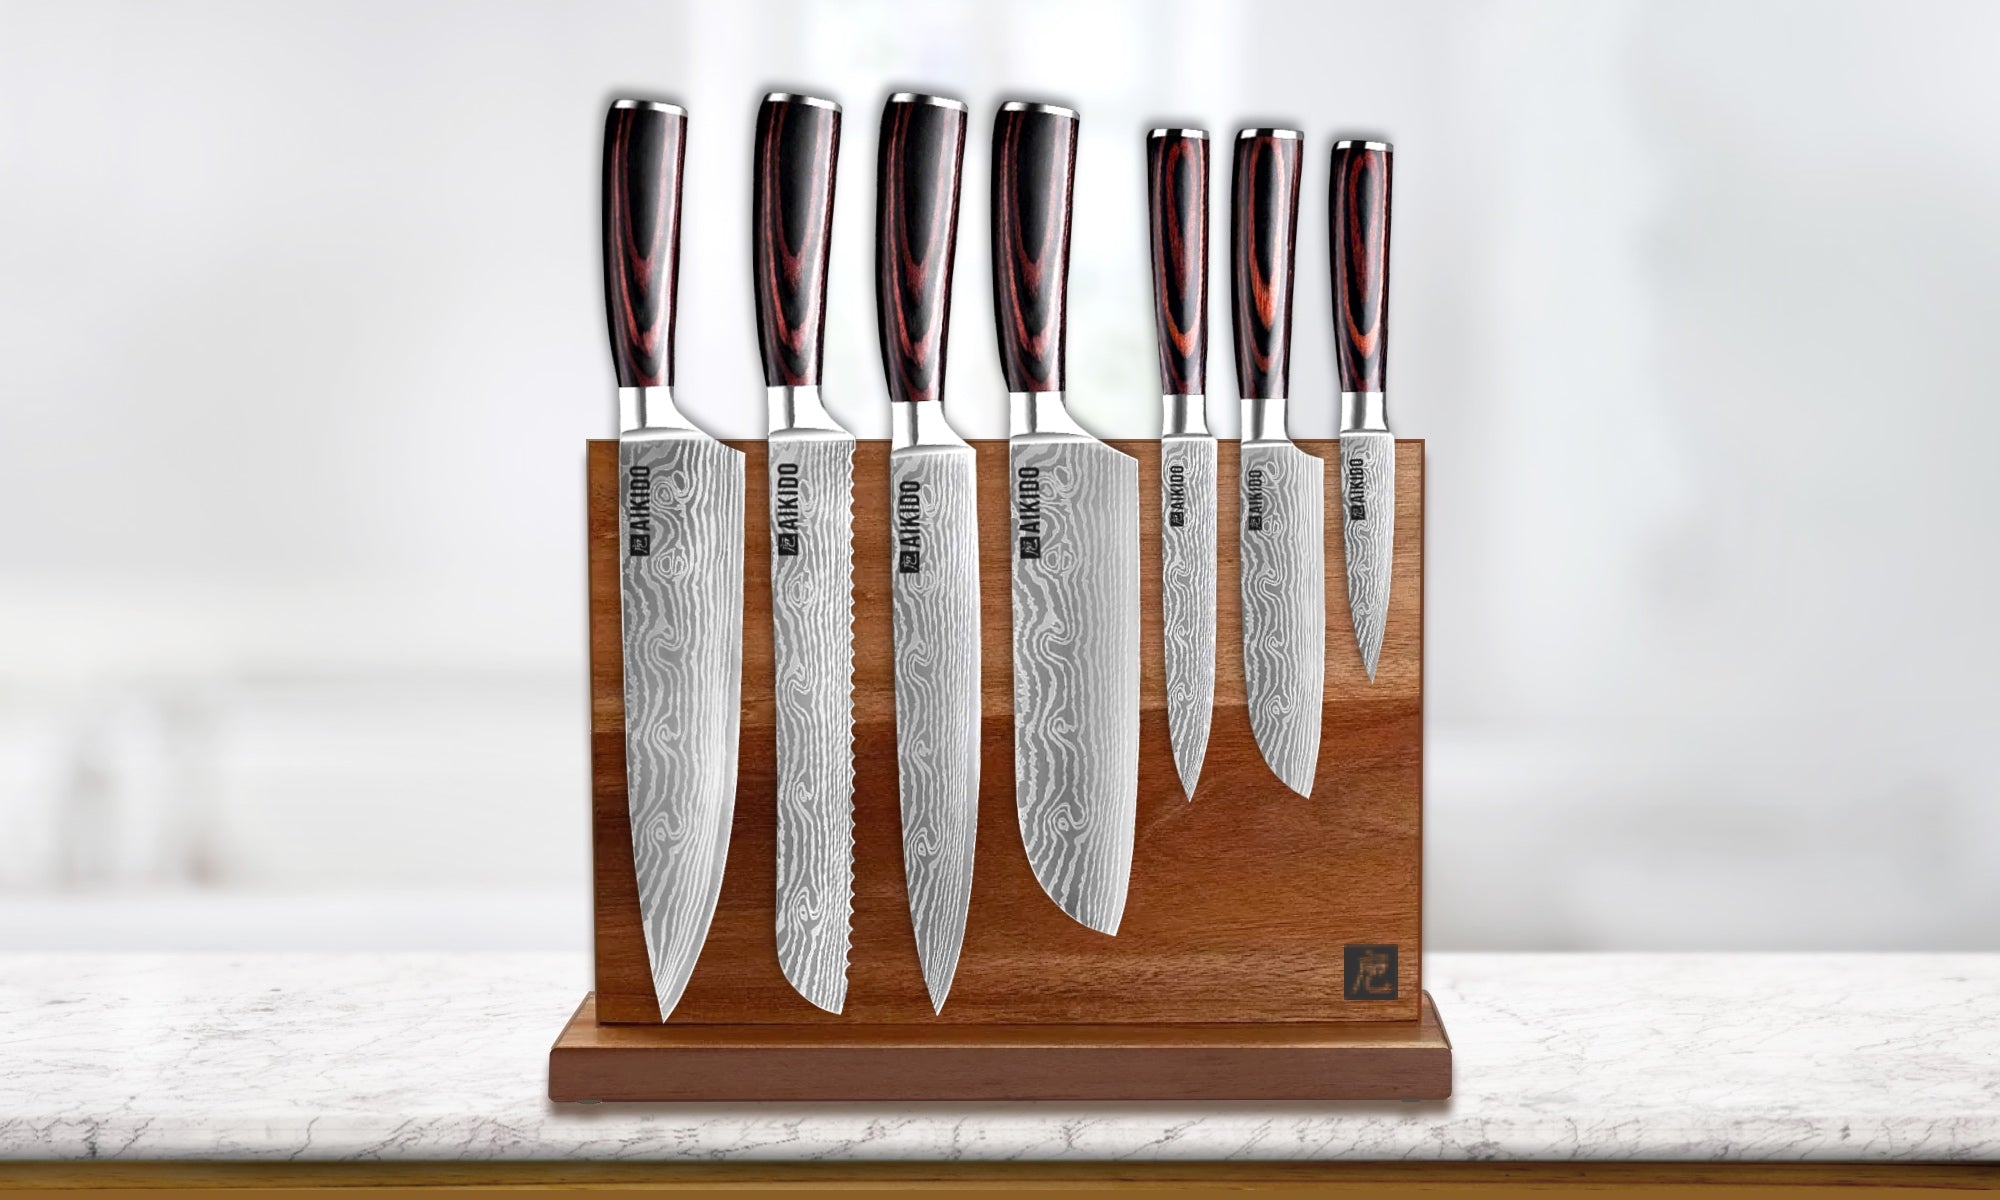 Signature 5-inch Steak Knife – Aikido Steel